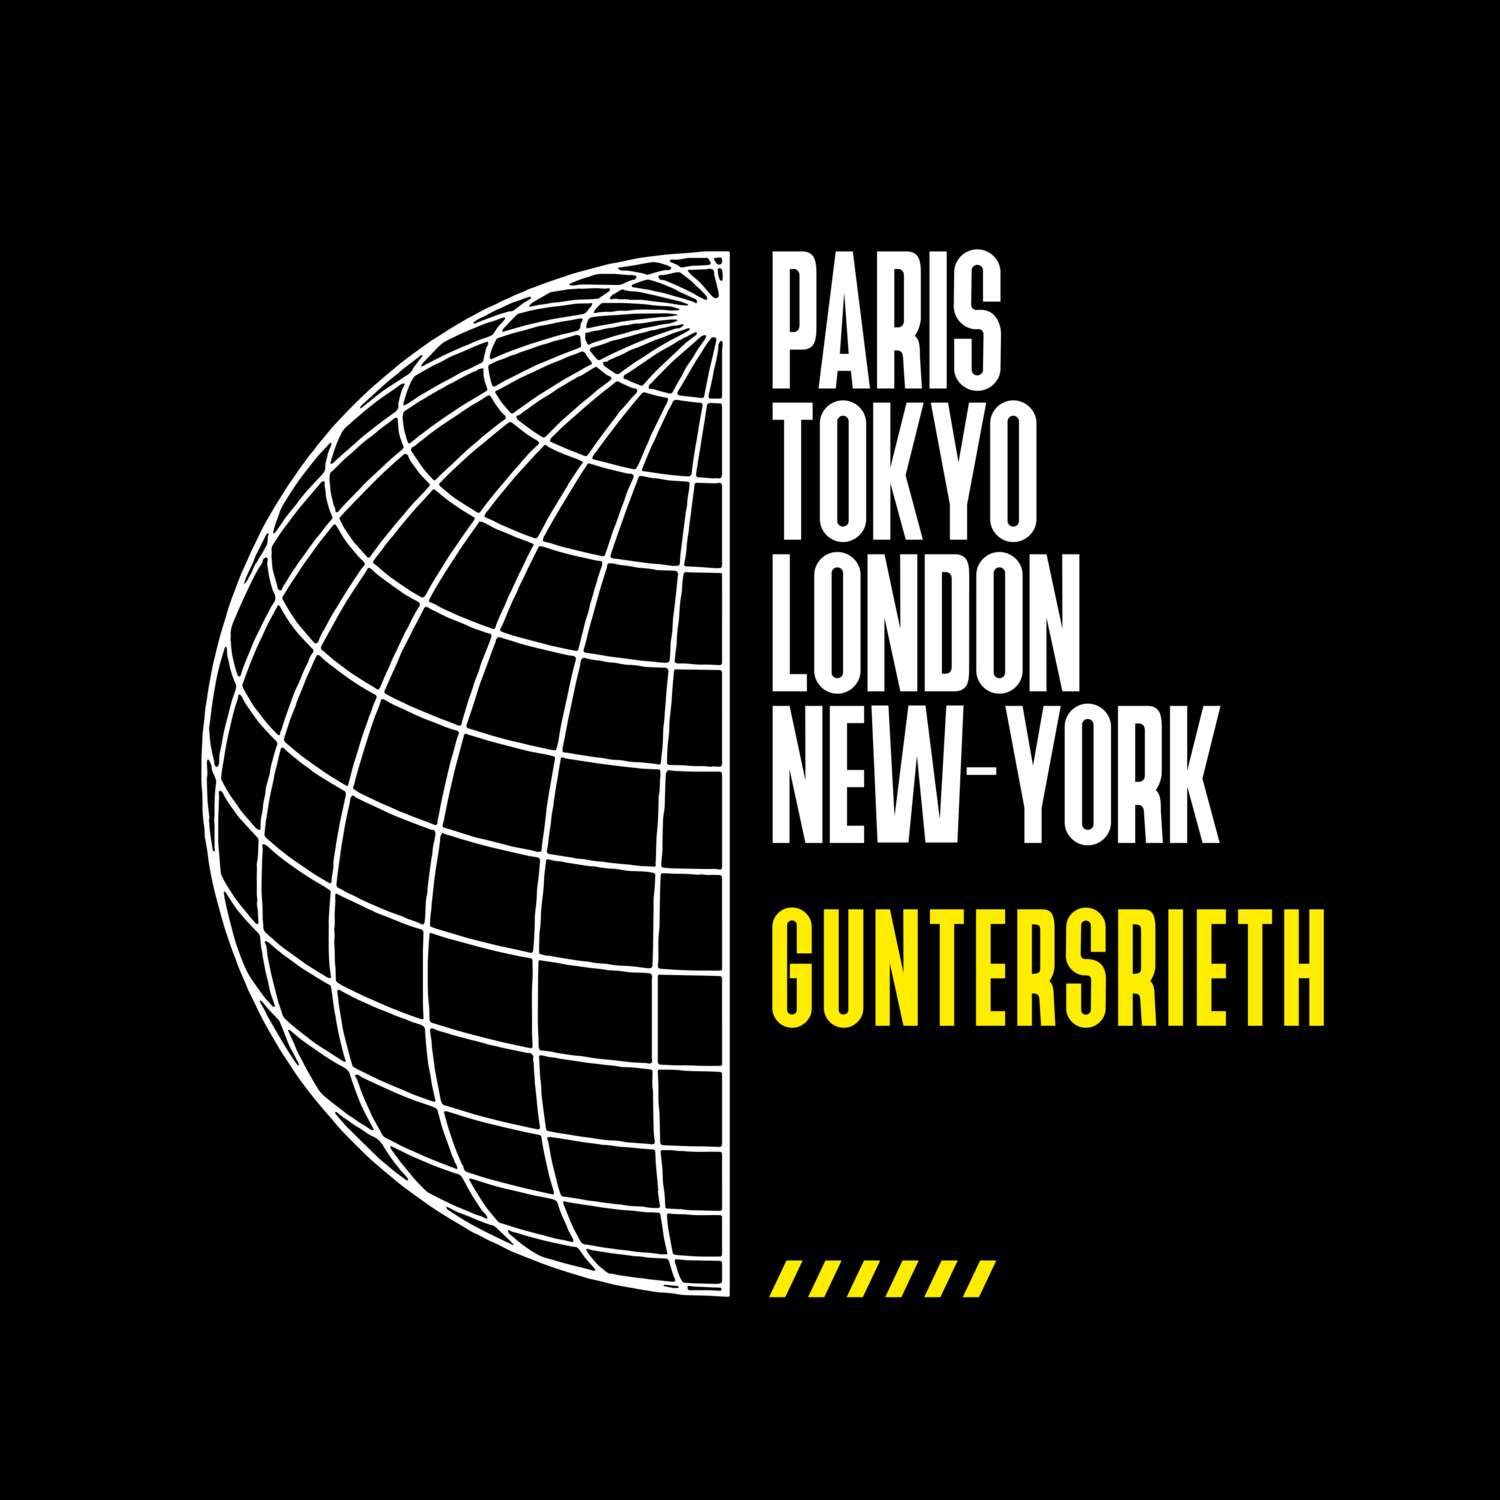 Guntersrieth T-Shirt »Paris Tokyo London«